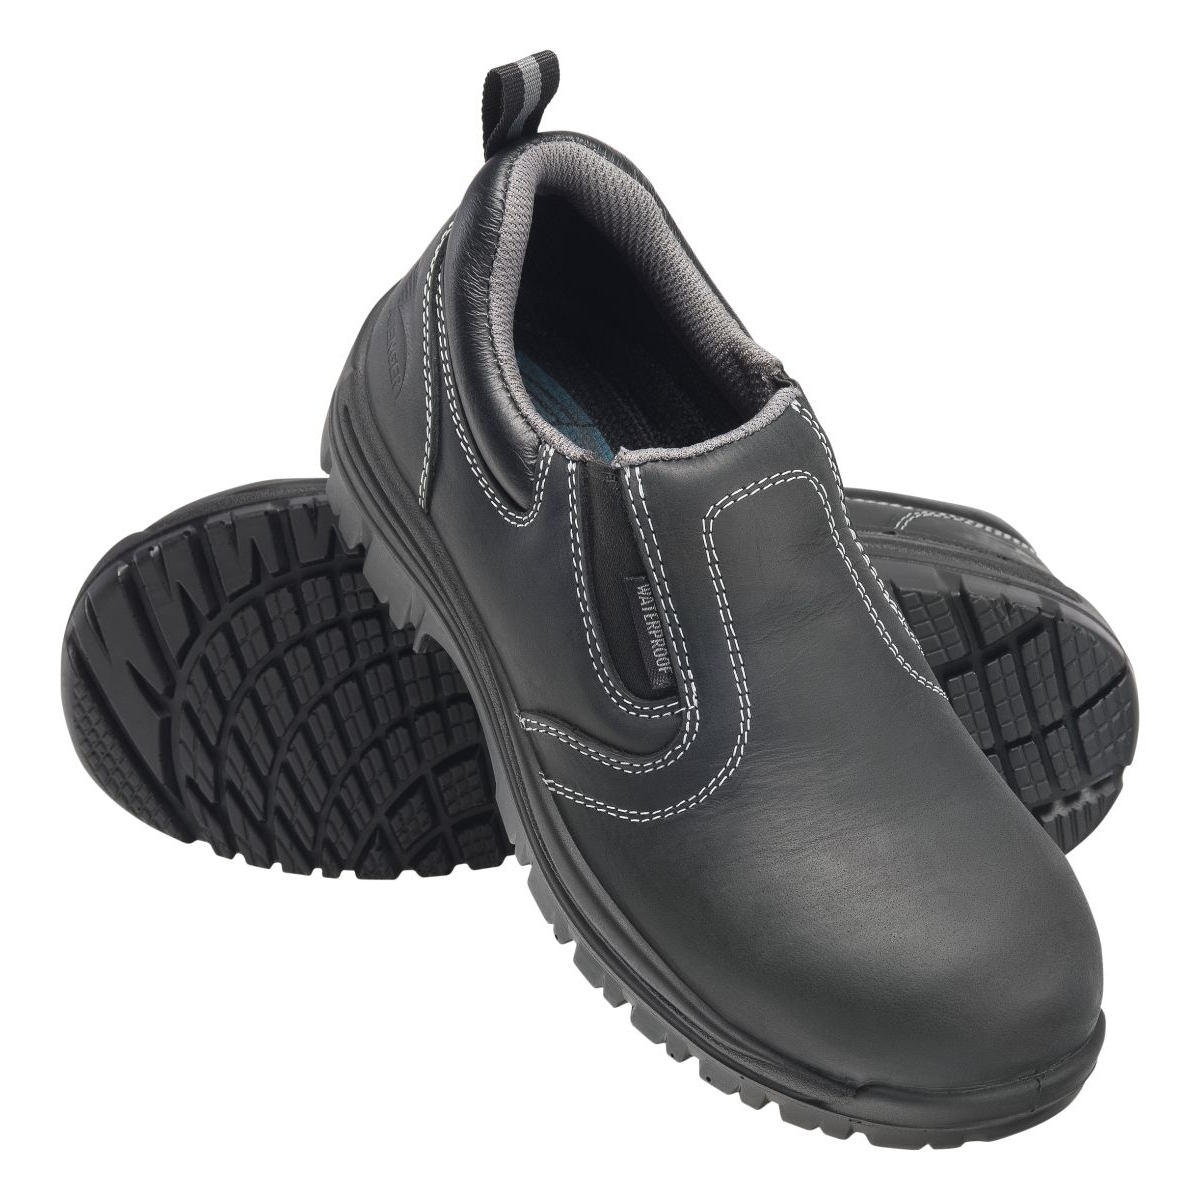 FSI FOOTWEAR SPECIALTIES INTERNATIONAL NAUTILUS Avenger Women's Foreman Slip-On Composite Toe PR Work Shoes Black - A7169 - BLACK, 11-M